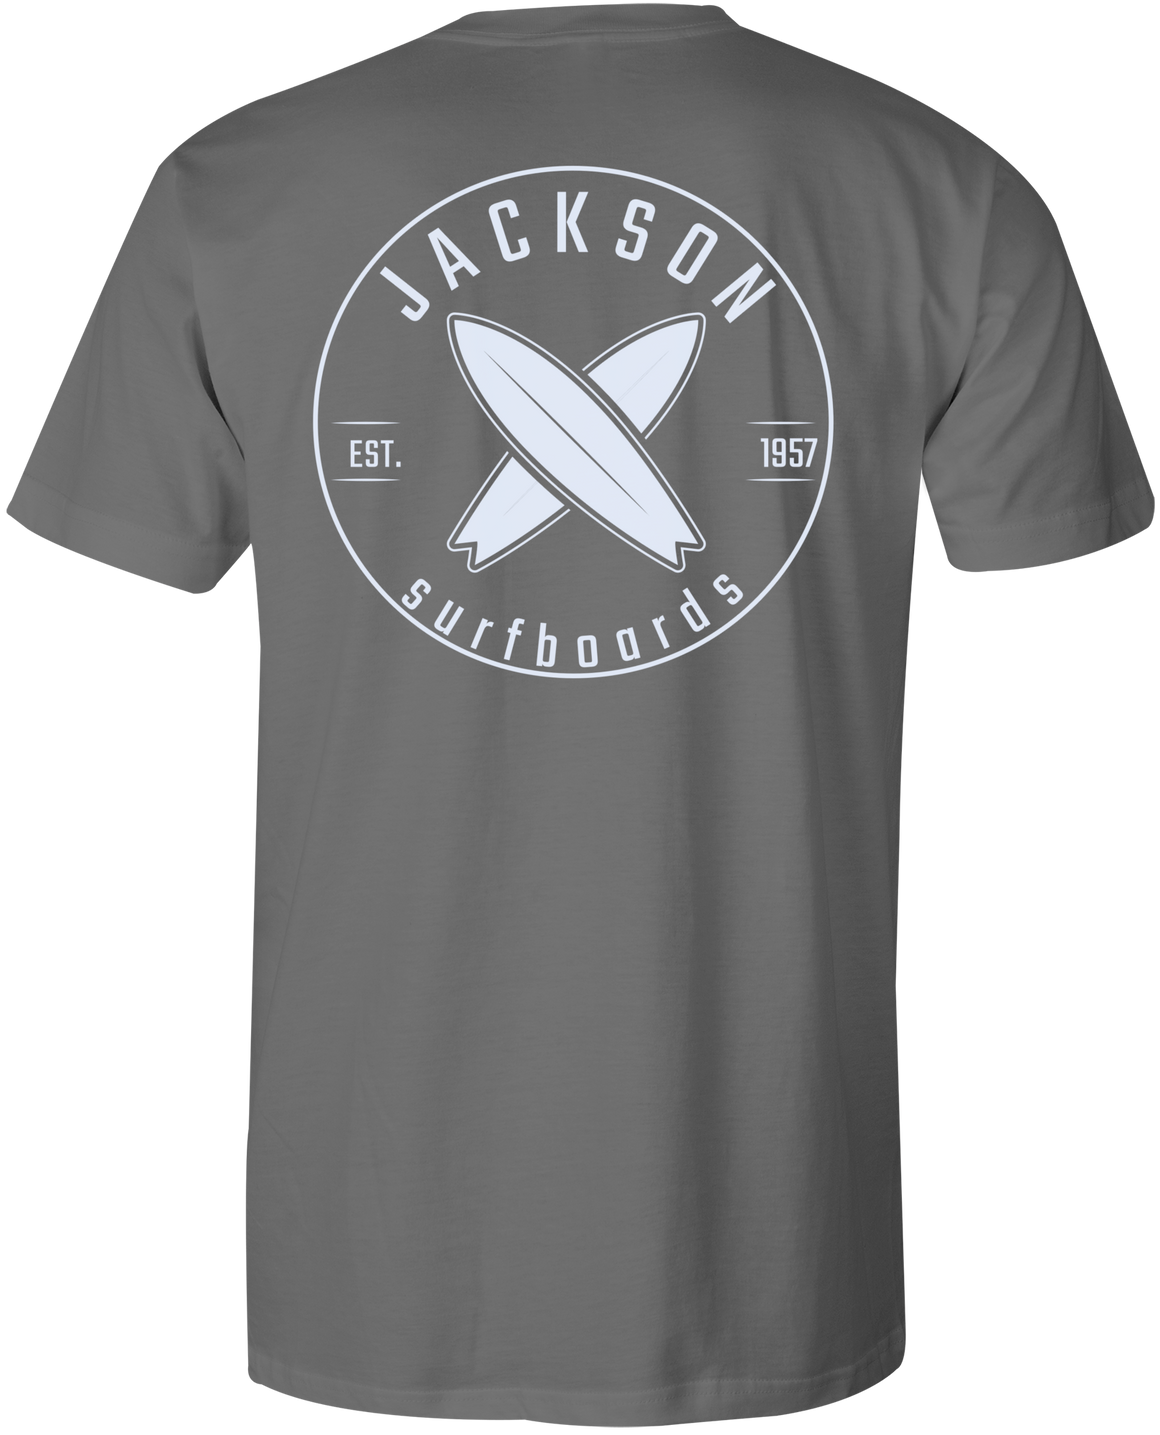 Jackson Surfboards T-Shirt Black